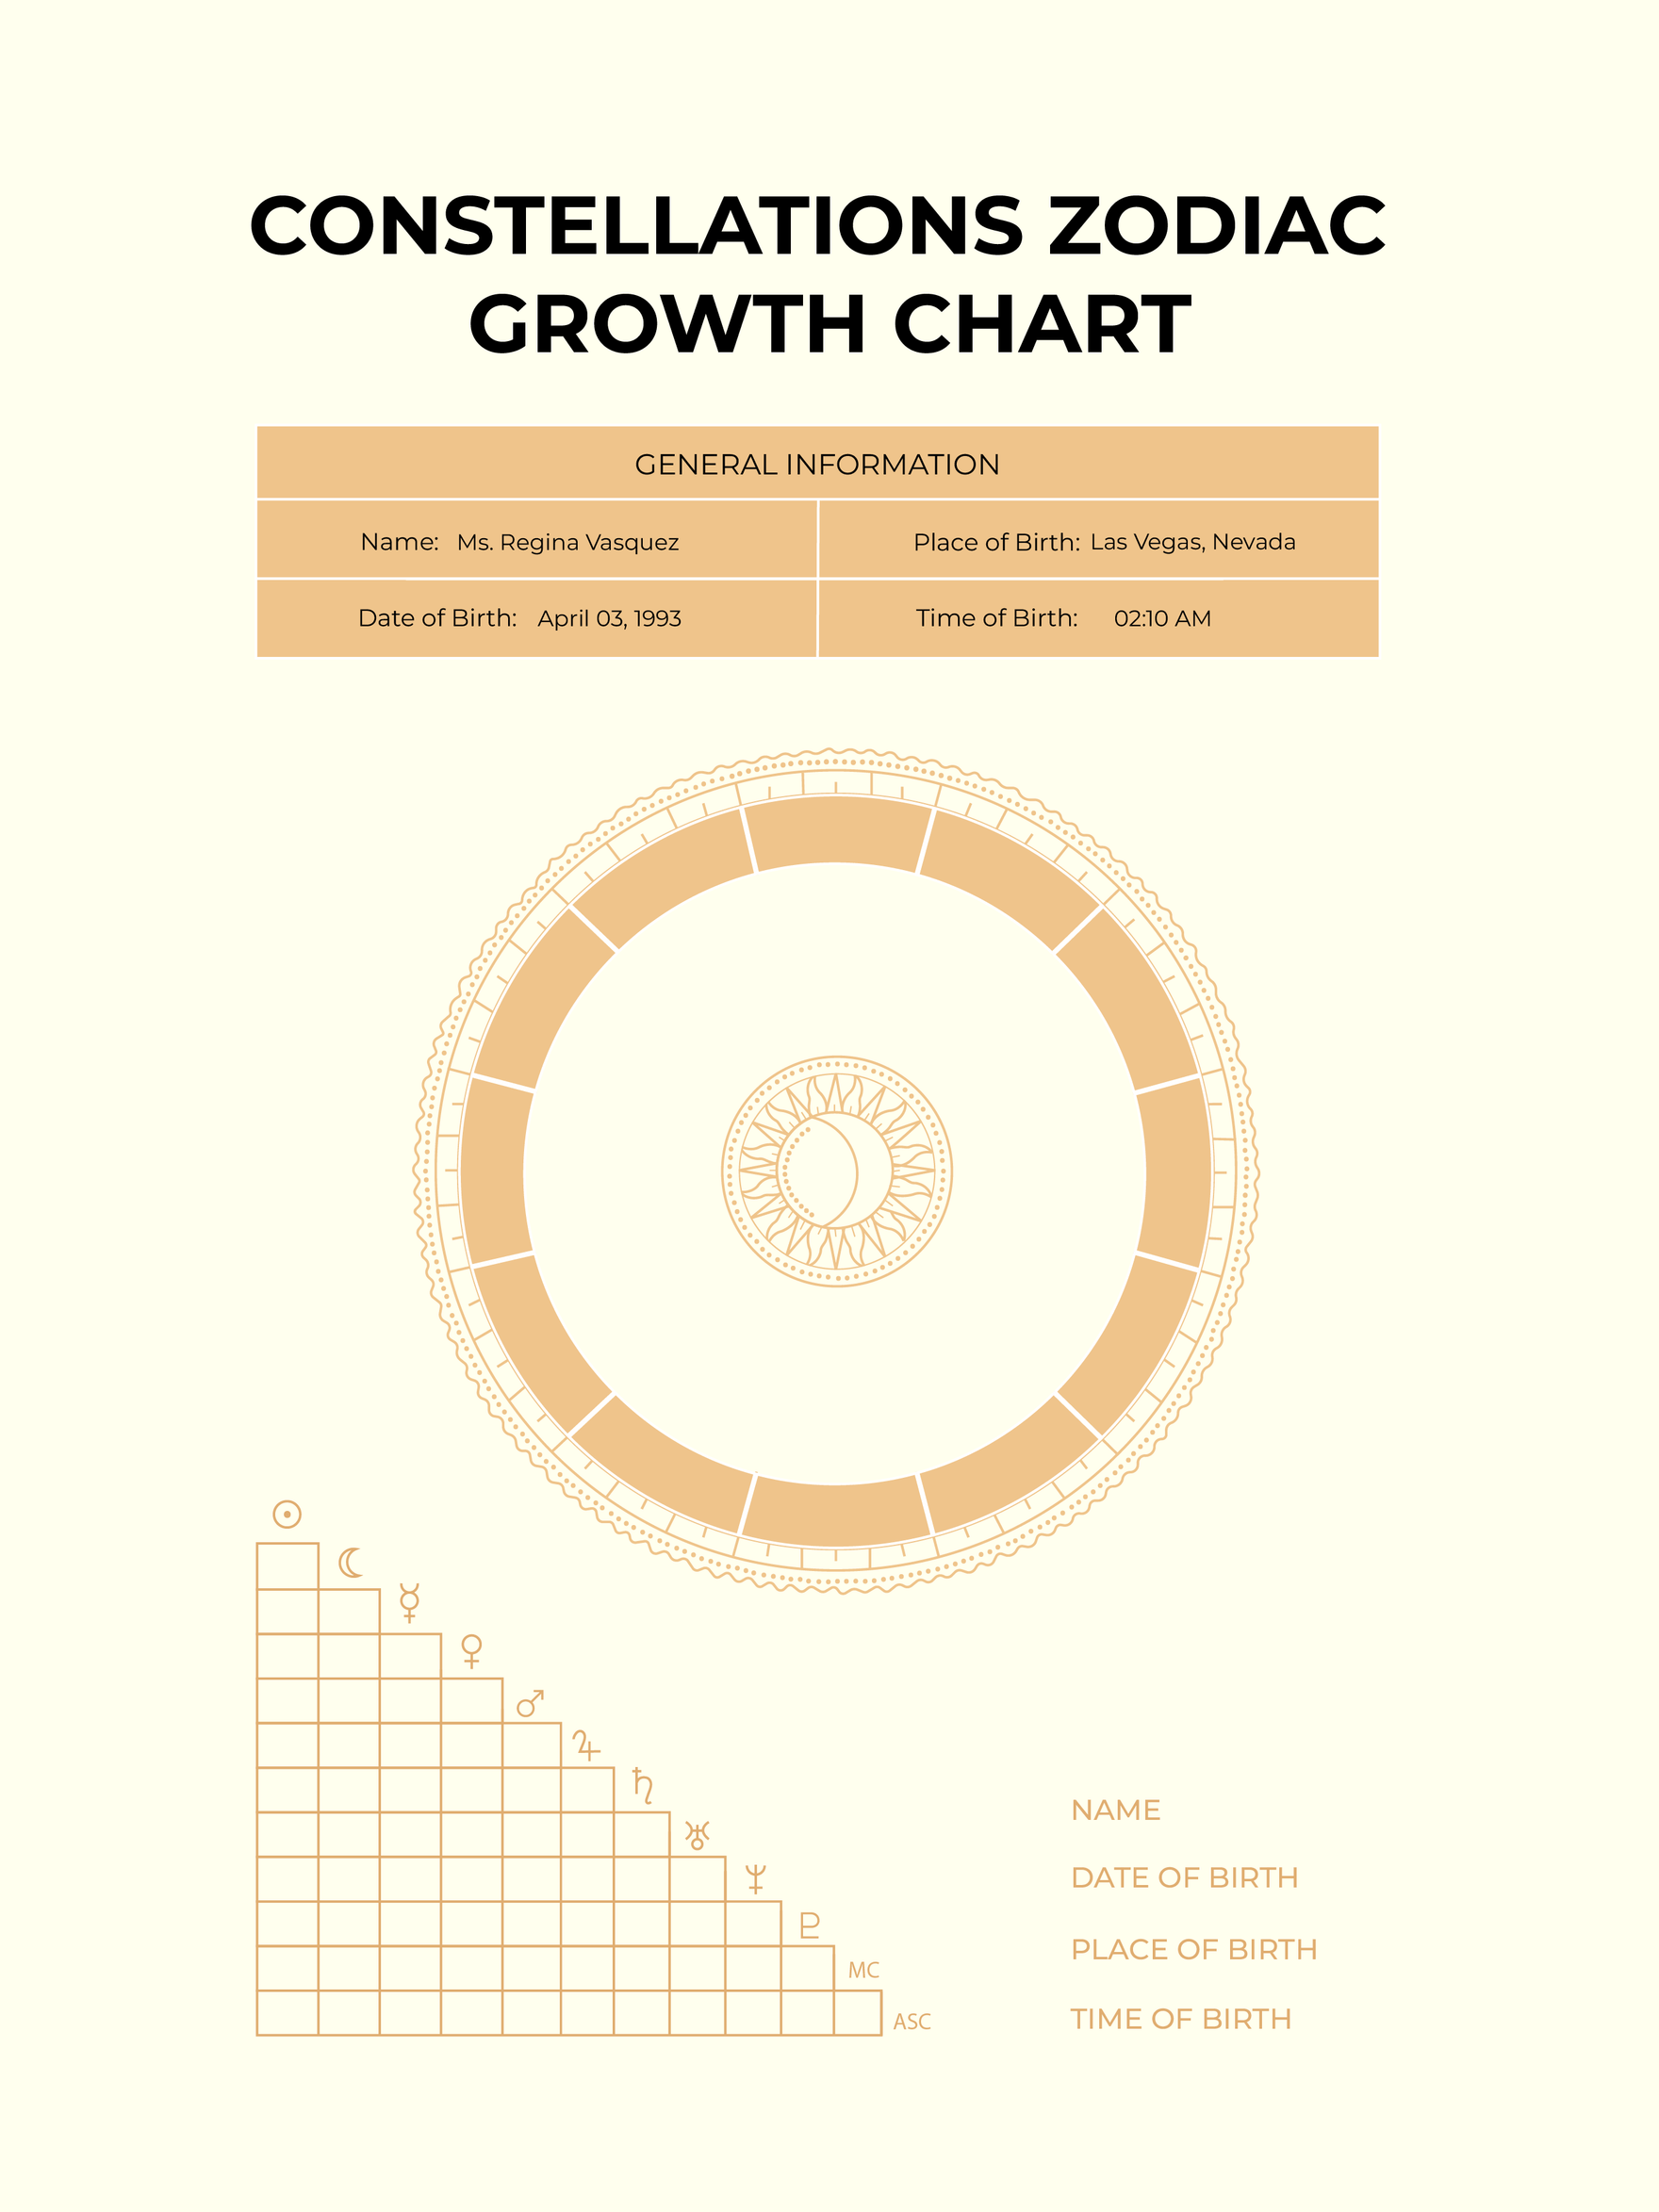 Free Constellations Zodiac Growth Chart  in PDF, Illustrator